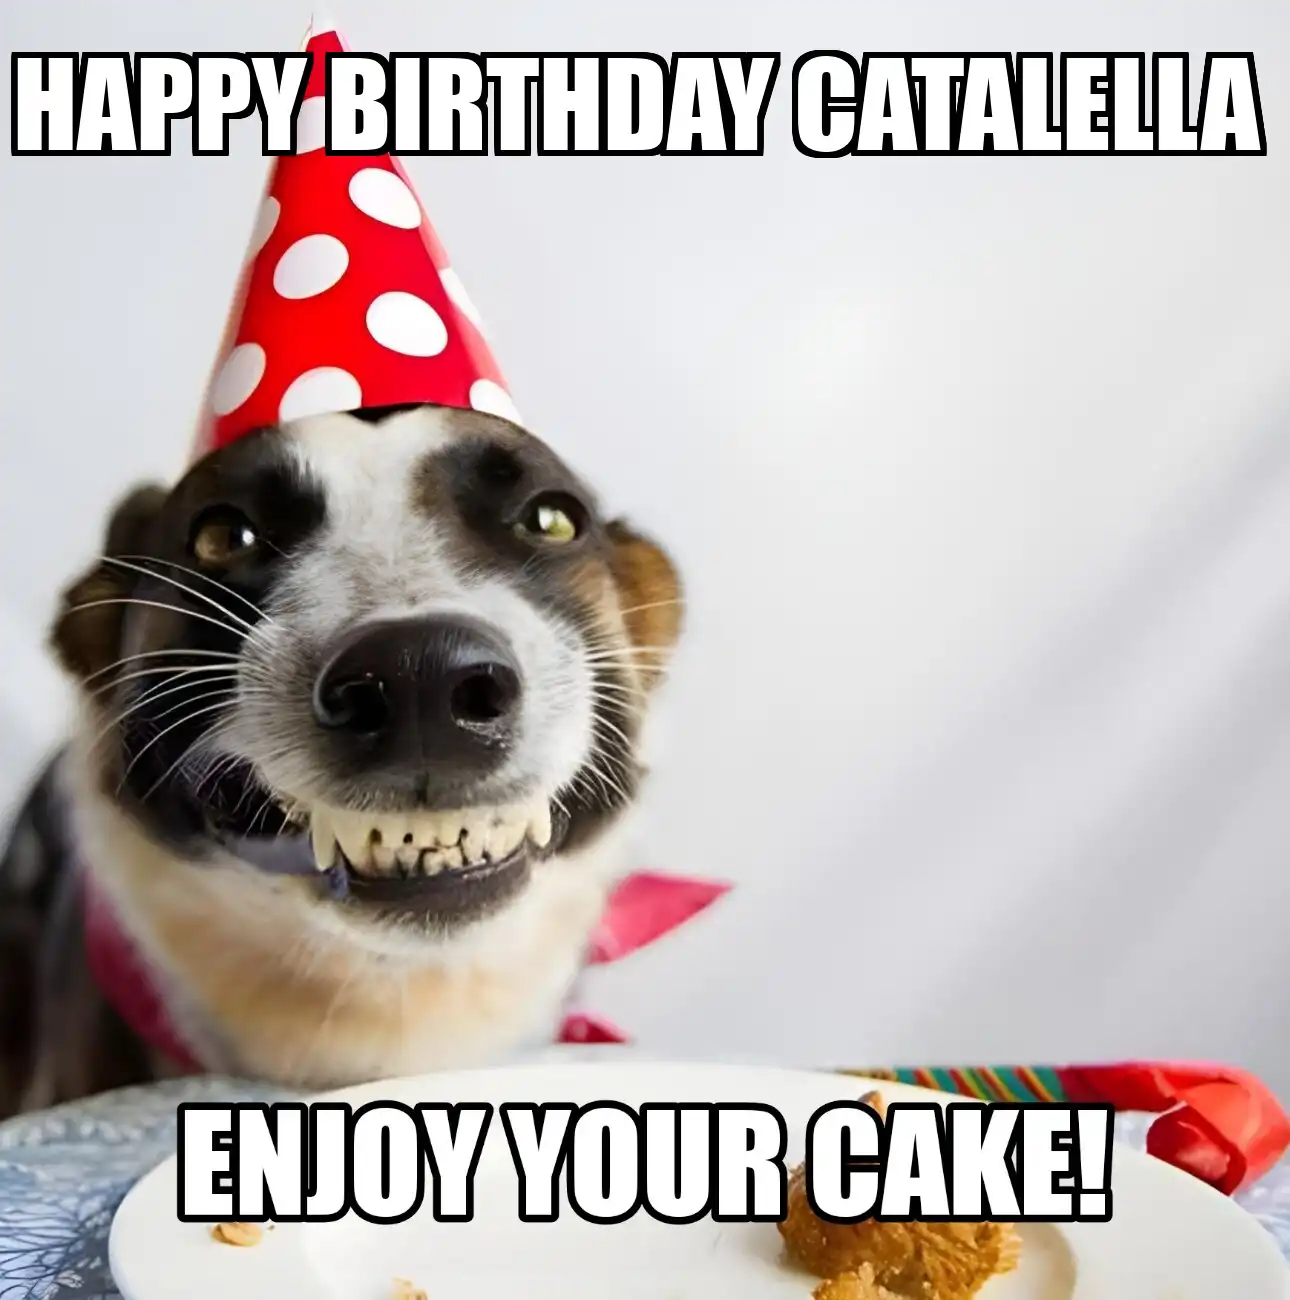 Happy Birthday Catalella Enjoy Your Cake Dog Meme